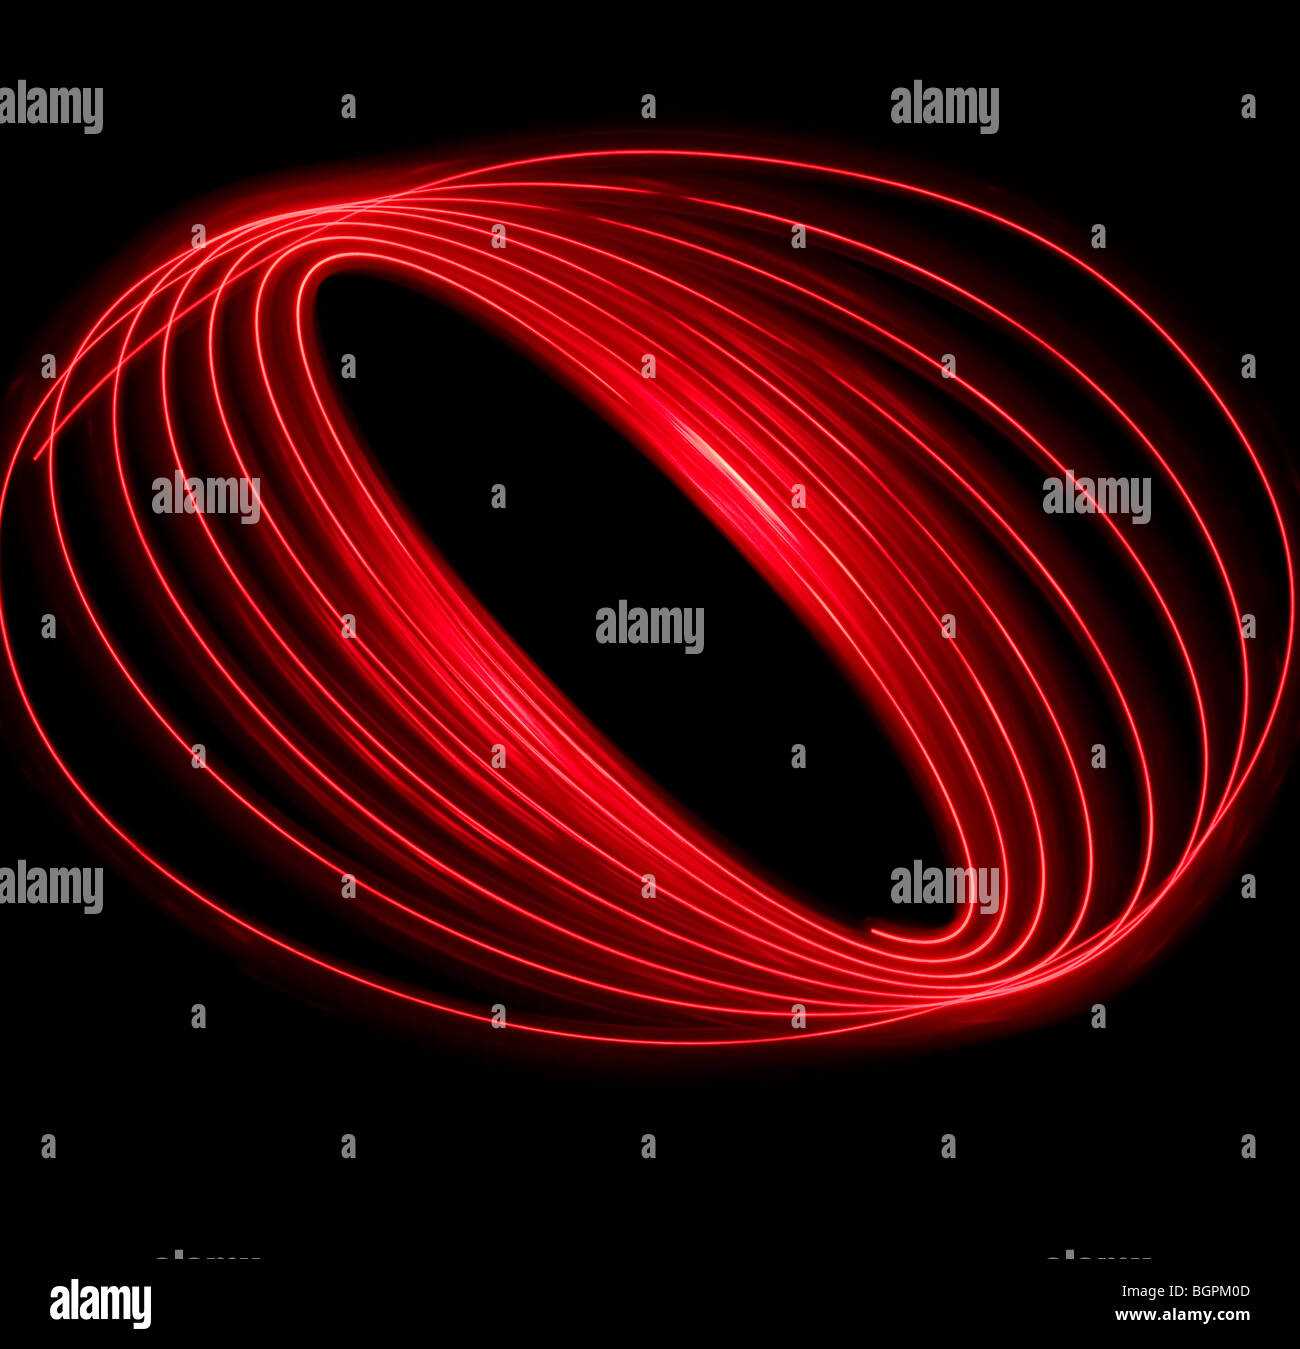 Luce rossa physiogram spiralato. Foto Stock